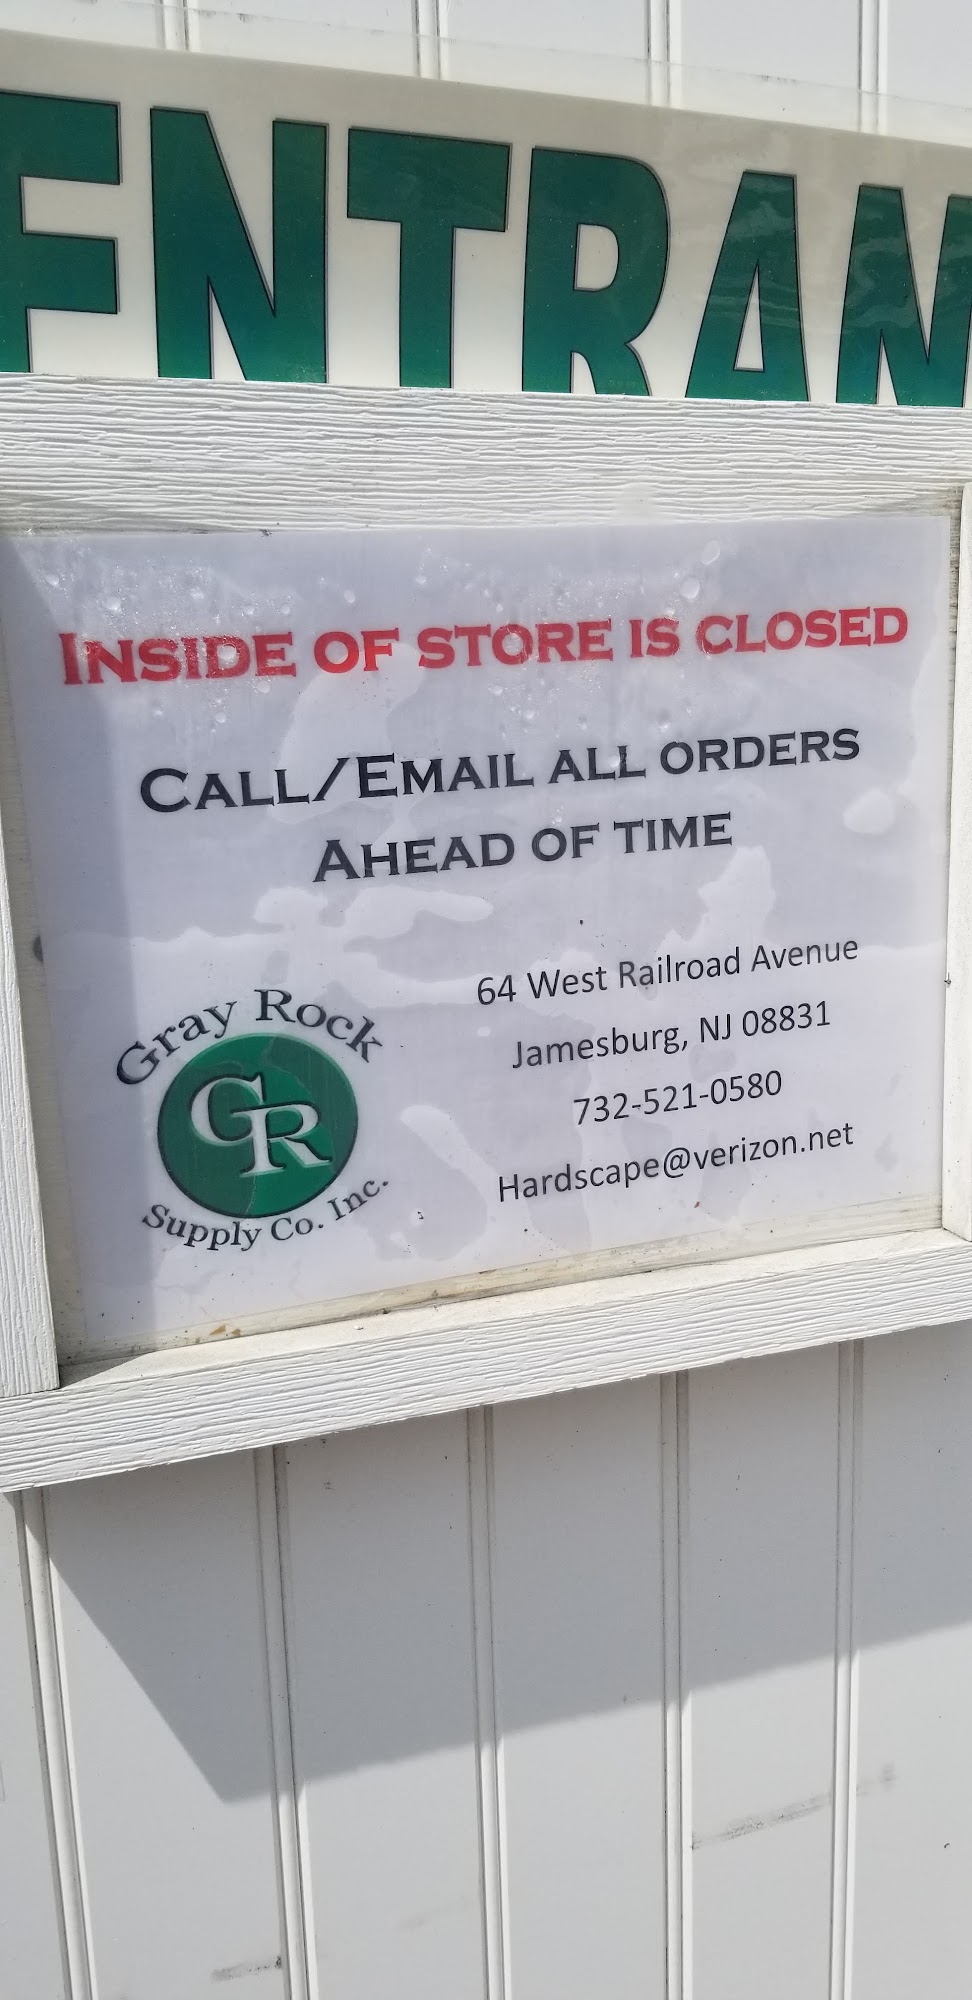 Gray Rock Supply Company, Inc. 64 W Railroad Ave, Jamesburg New Jersey 08831